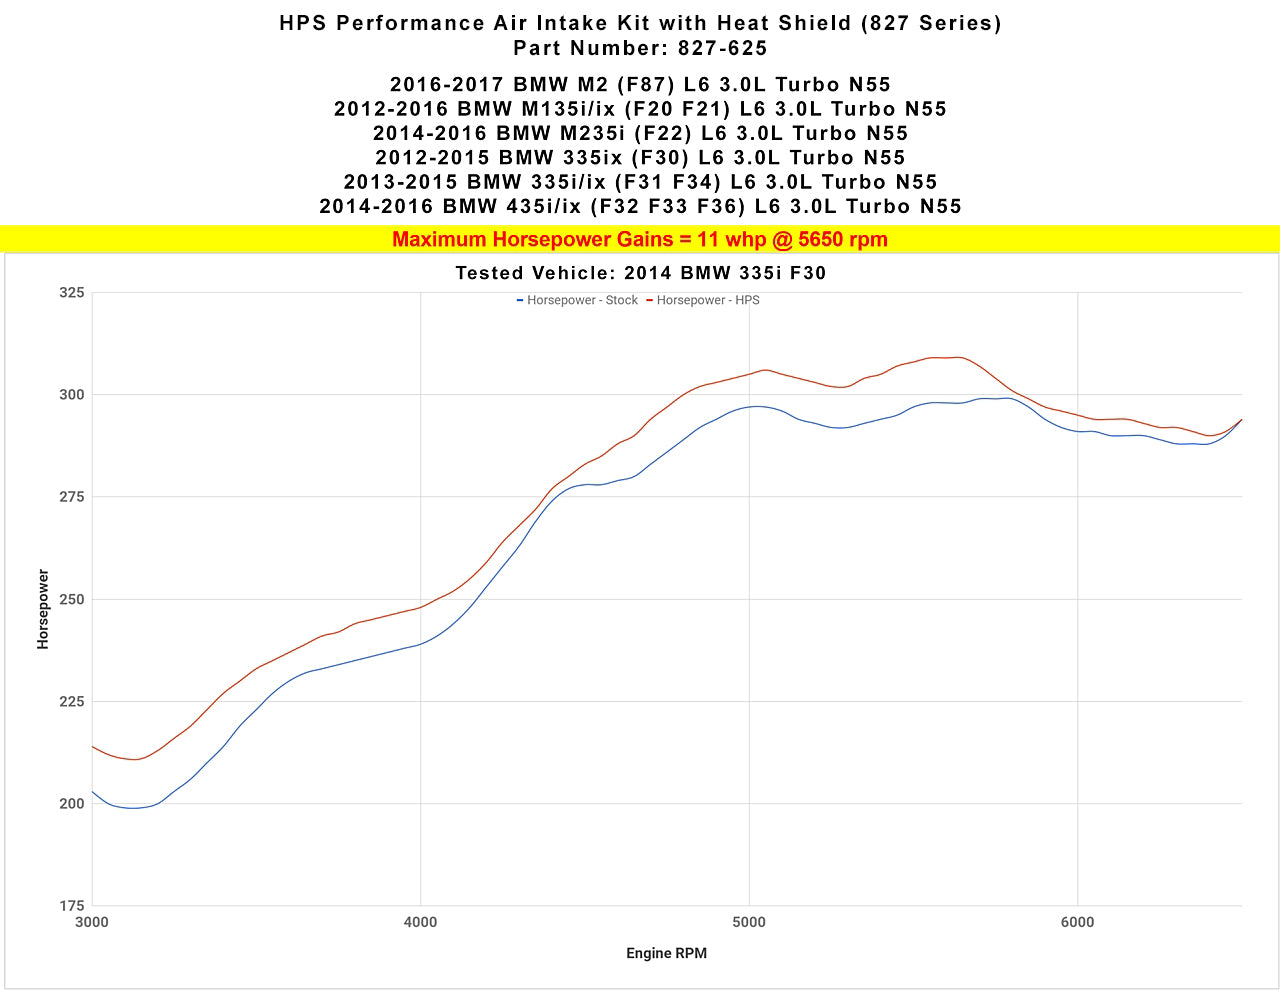 Dyno proven gains 11 whp HPS Performance Shortram Air Intake Kit 2014-2016 BMW 435i 435ix F32 F33 F36 3.0L Turbo N55 827-625BL